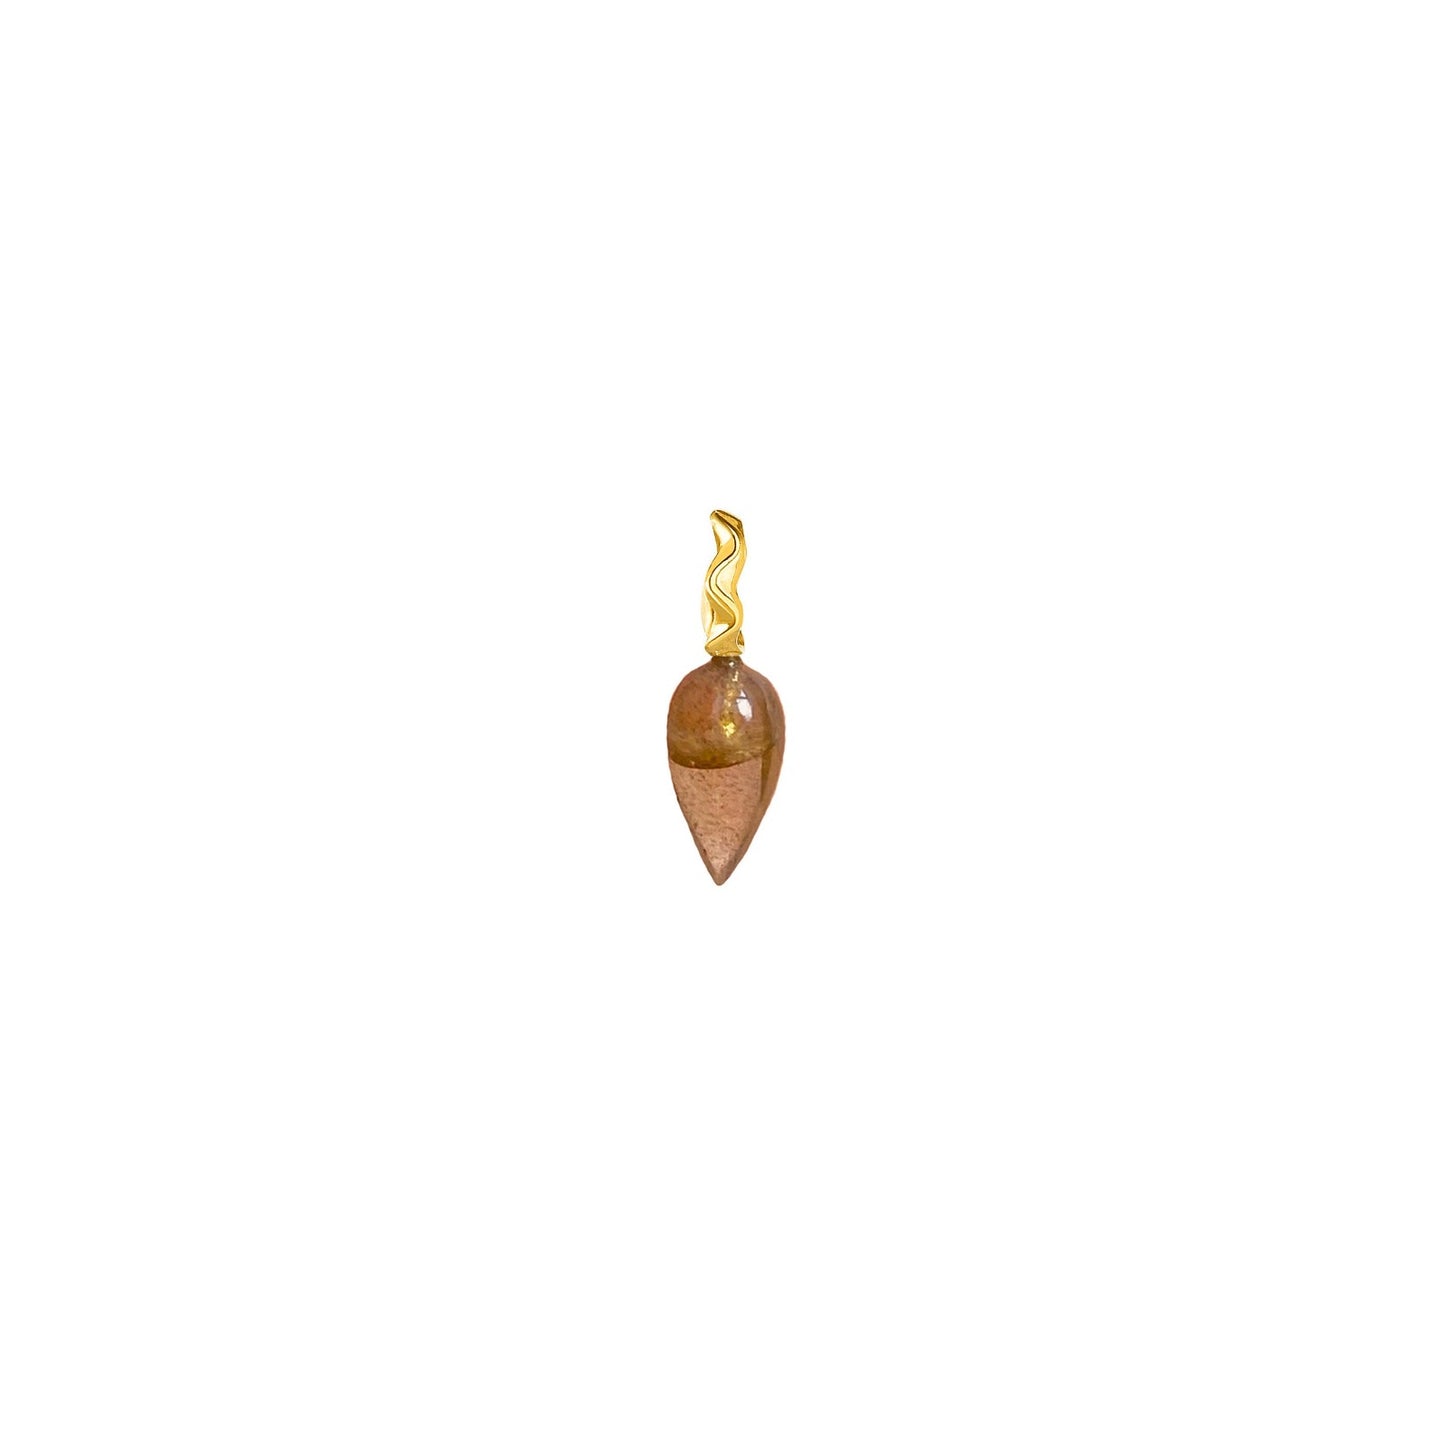 Smoky quartz acorn drop charm with 14k gold bail